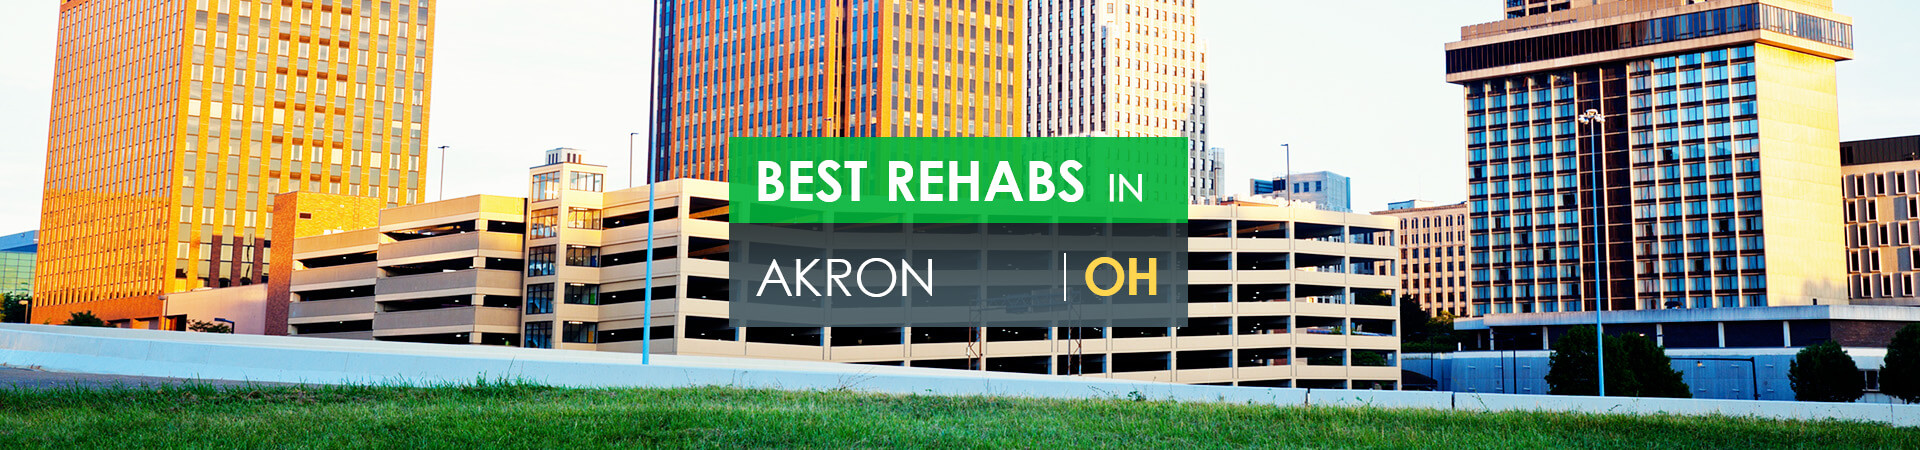 Best rehabs in Akron, OH